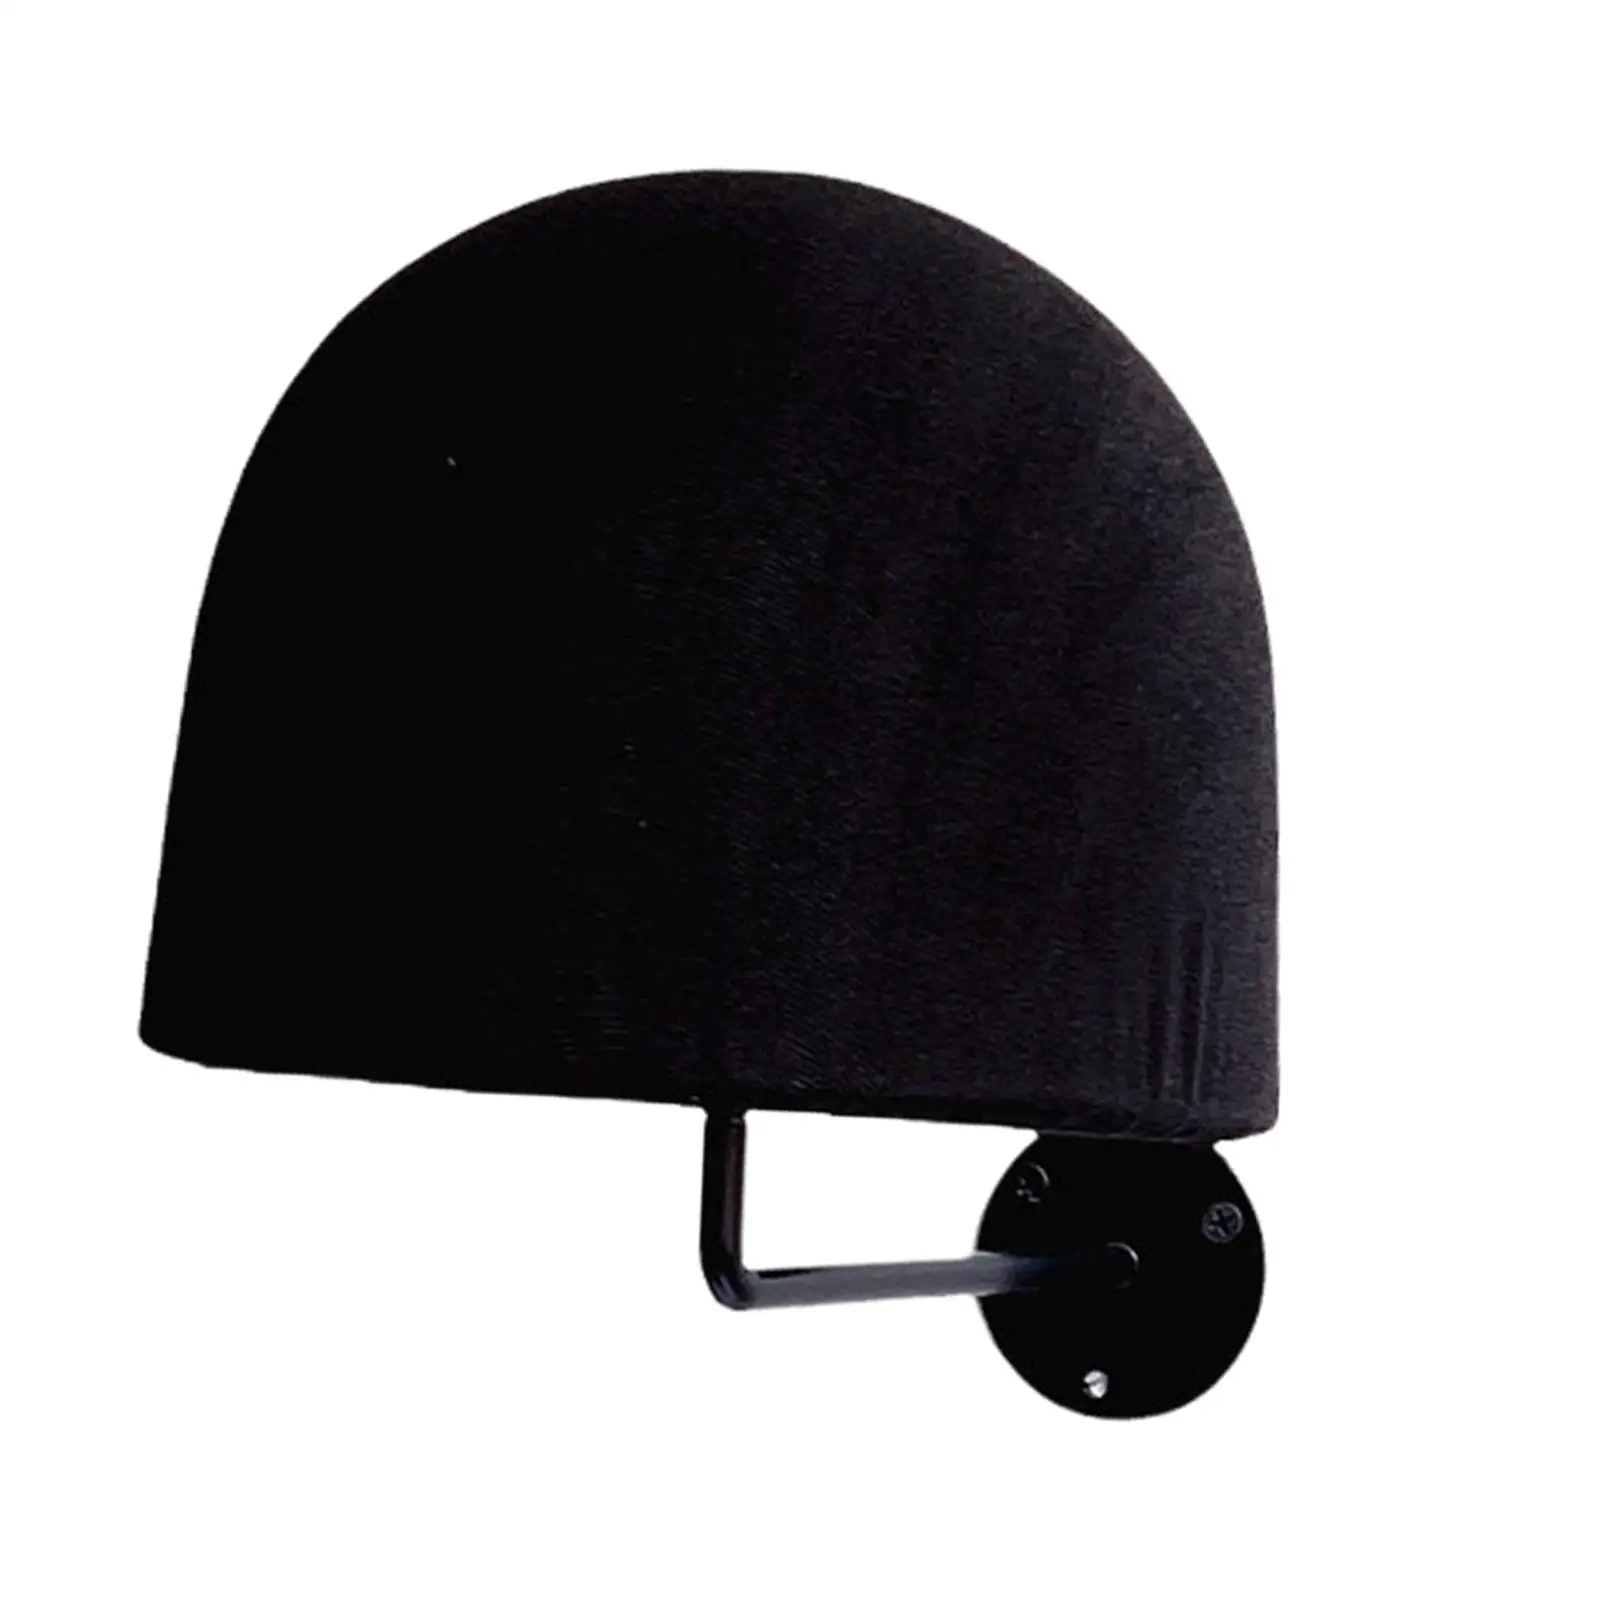 Hat Wig Display Stand with Black Hook Hat Holder Hat Bracket for Salon Home Use Stylist Beginner Decoration Hairdresser Training